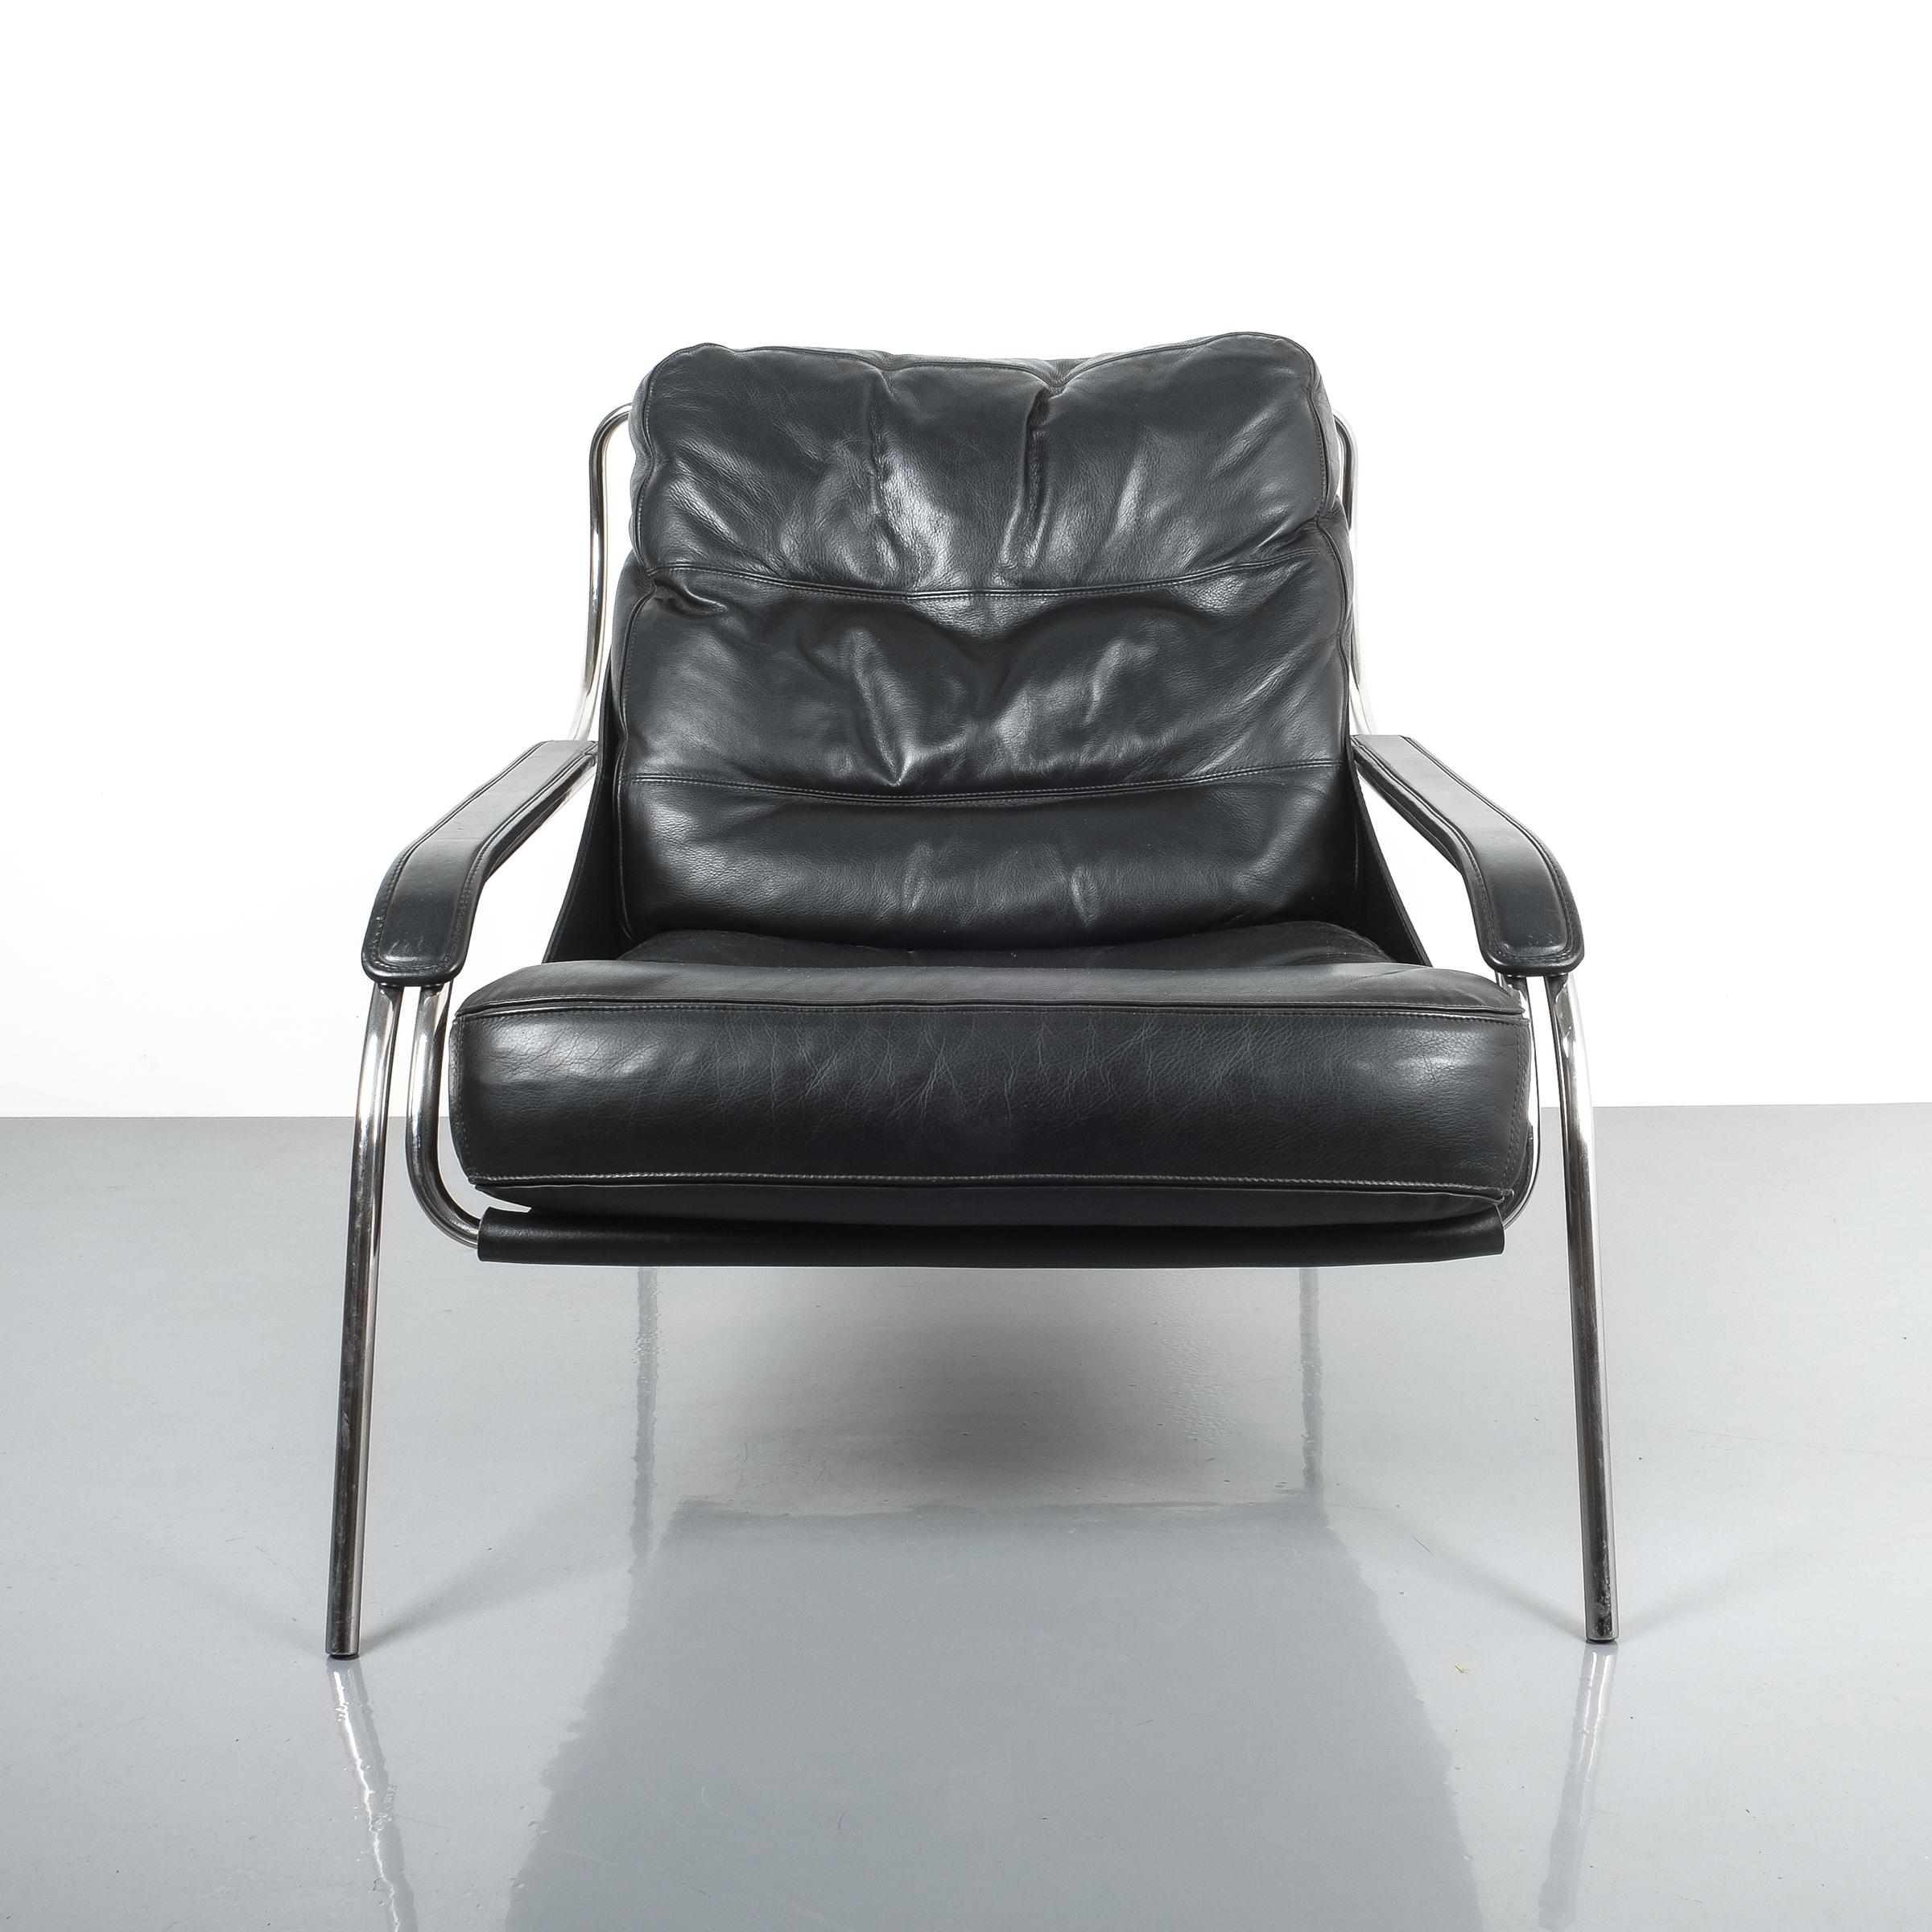 Italian Marco Zanuso Maggiolina Sling Black Leather Chair by Zanotta, 1947 For Sale